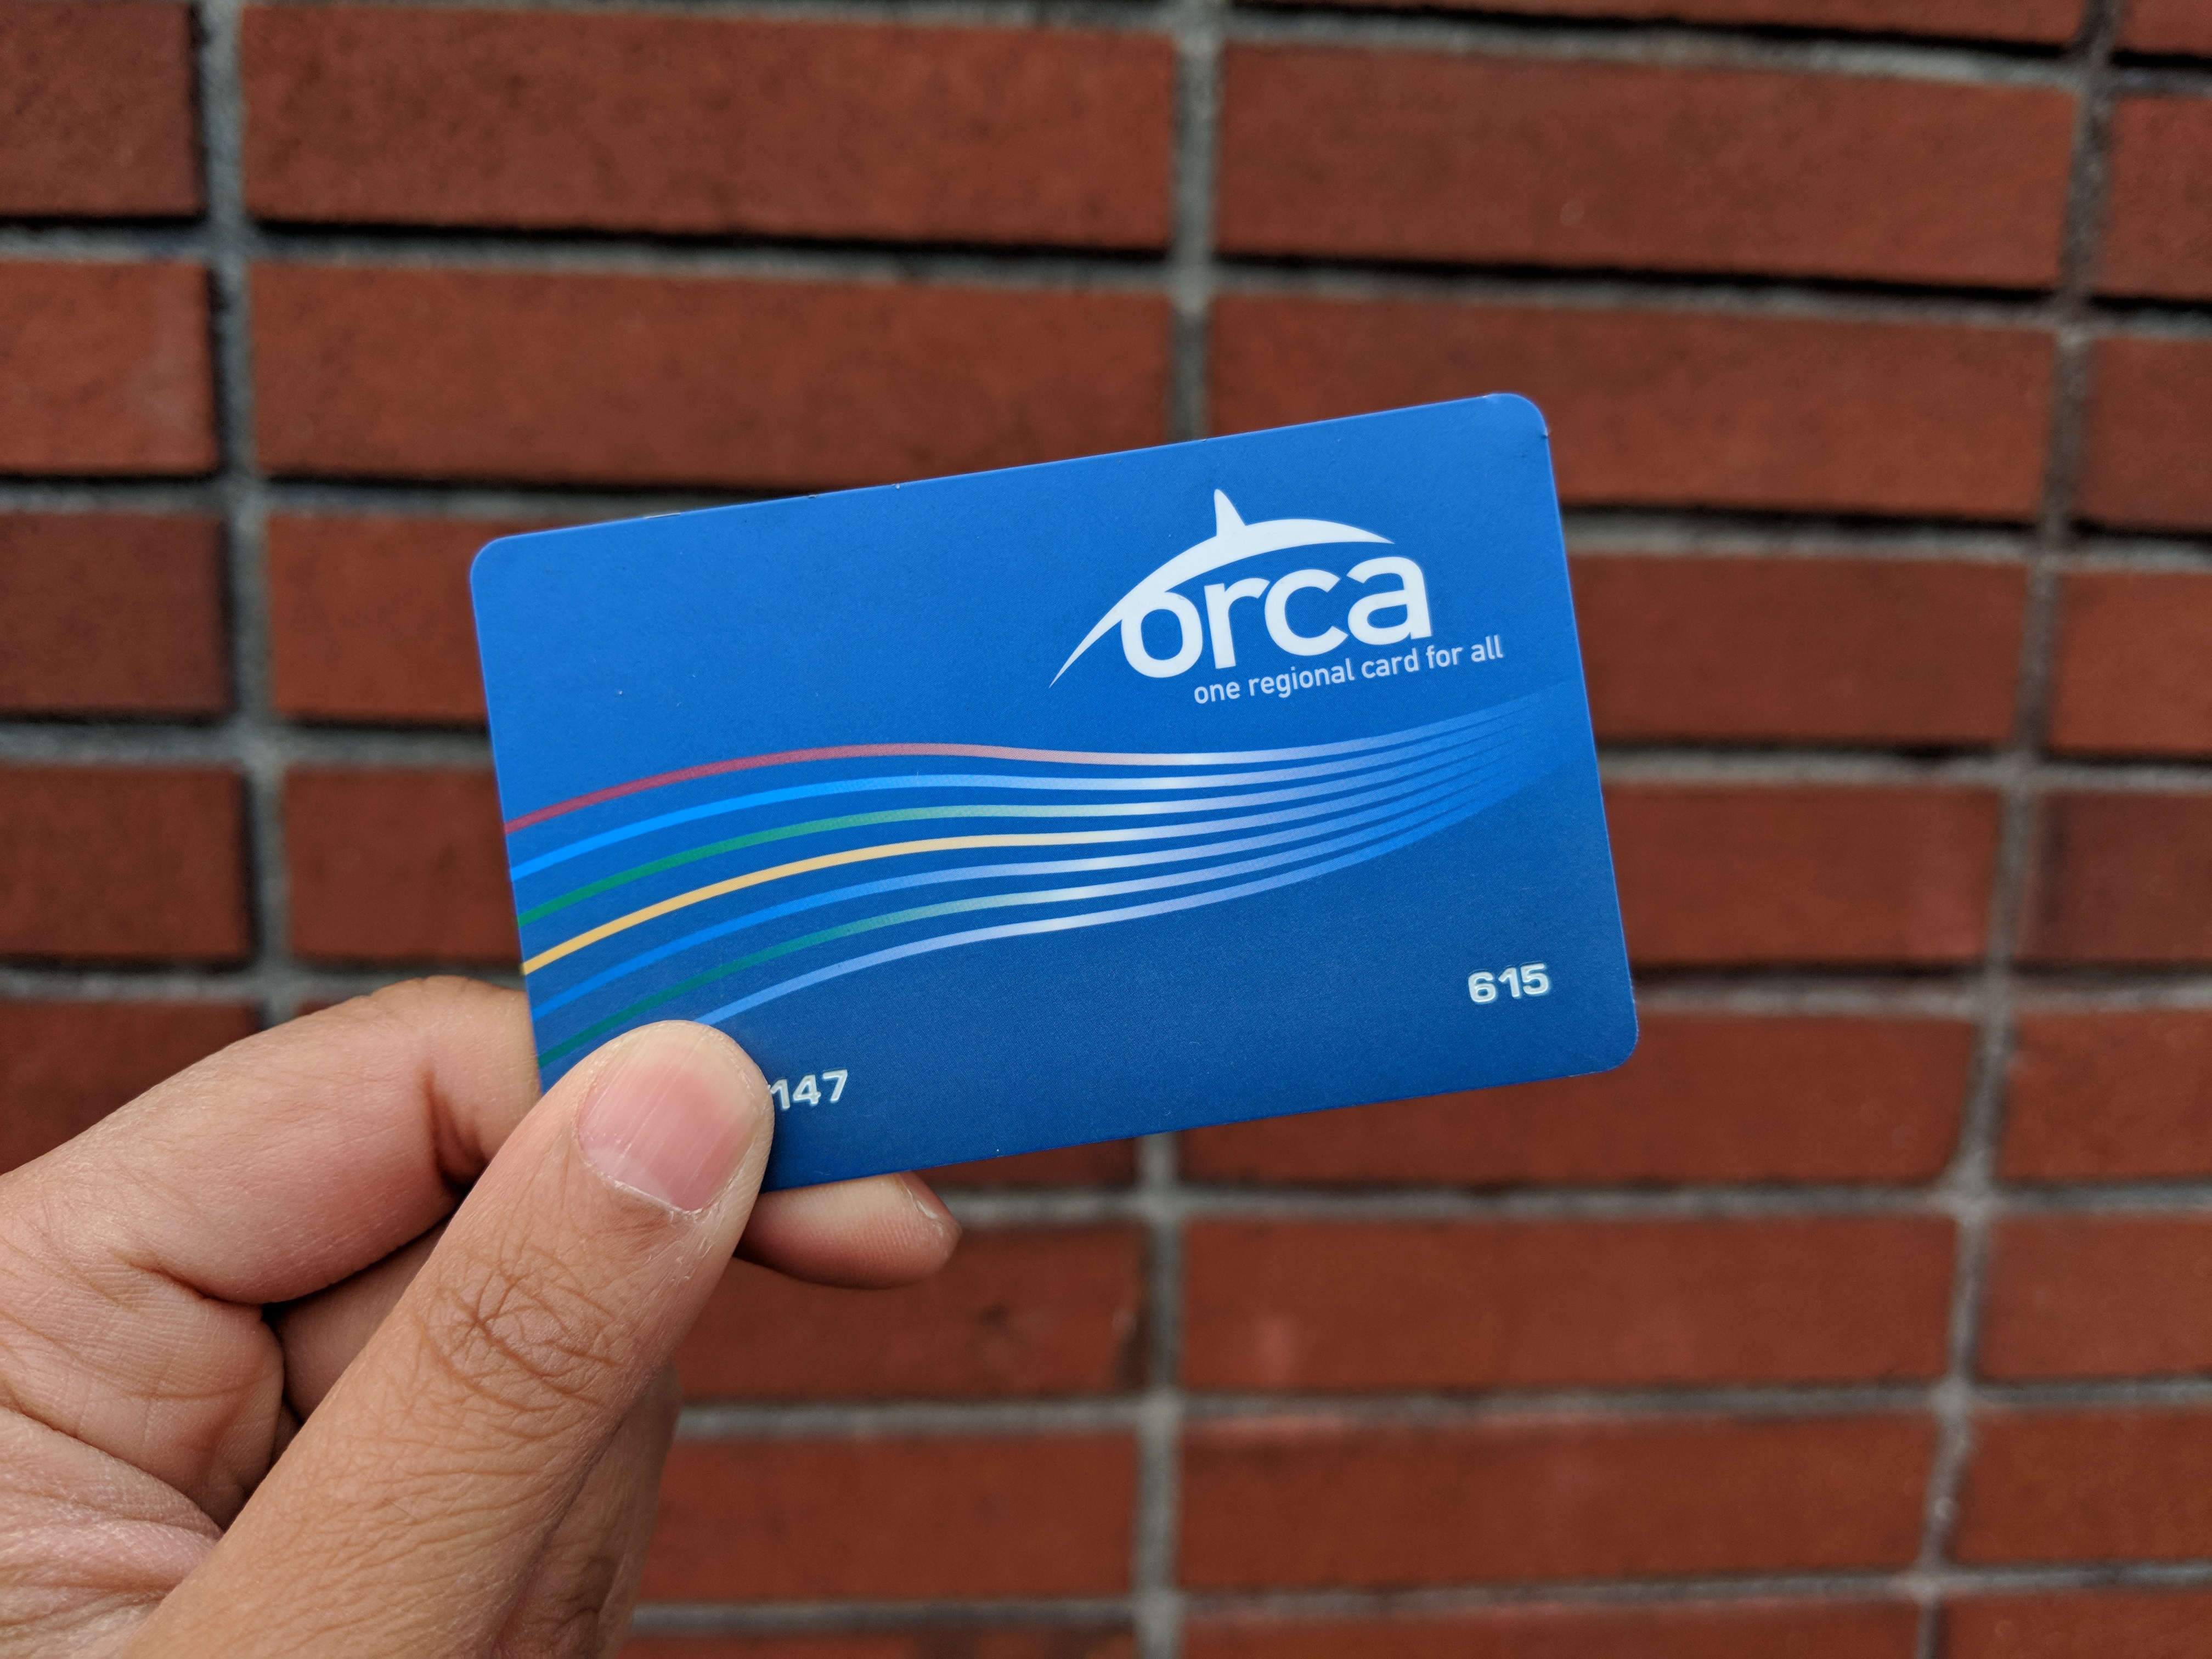 alternative transportation bus card orca card king county